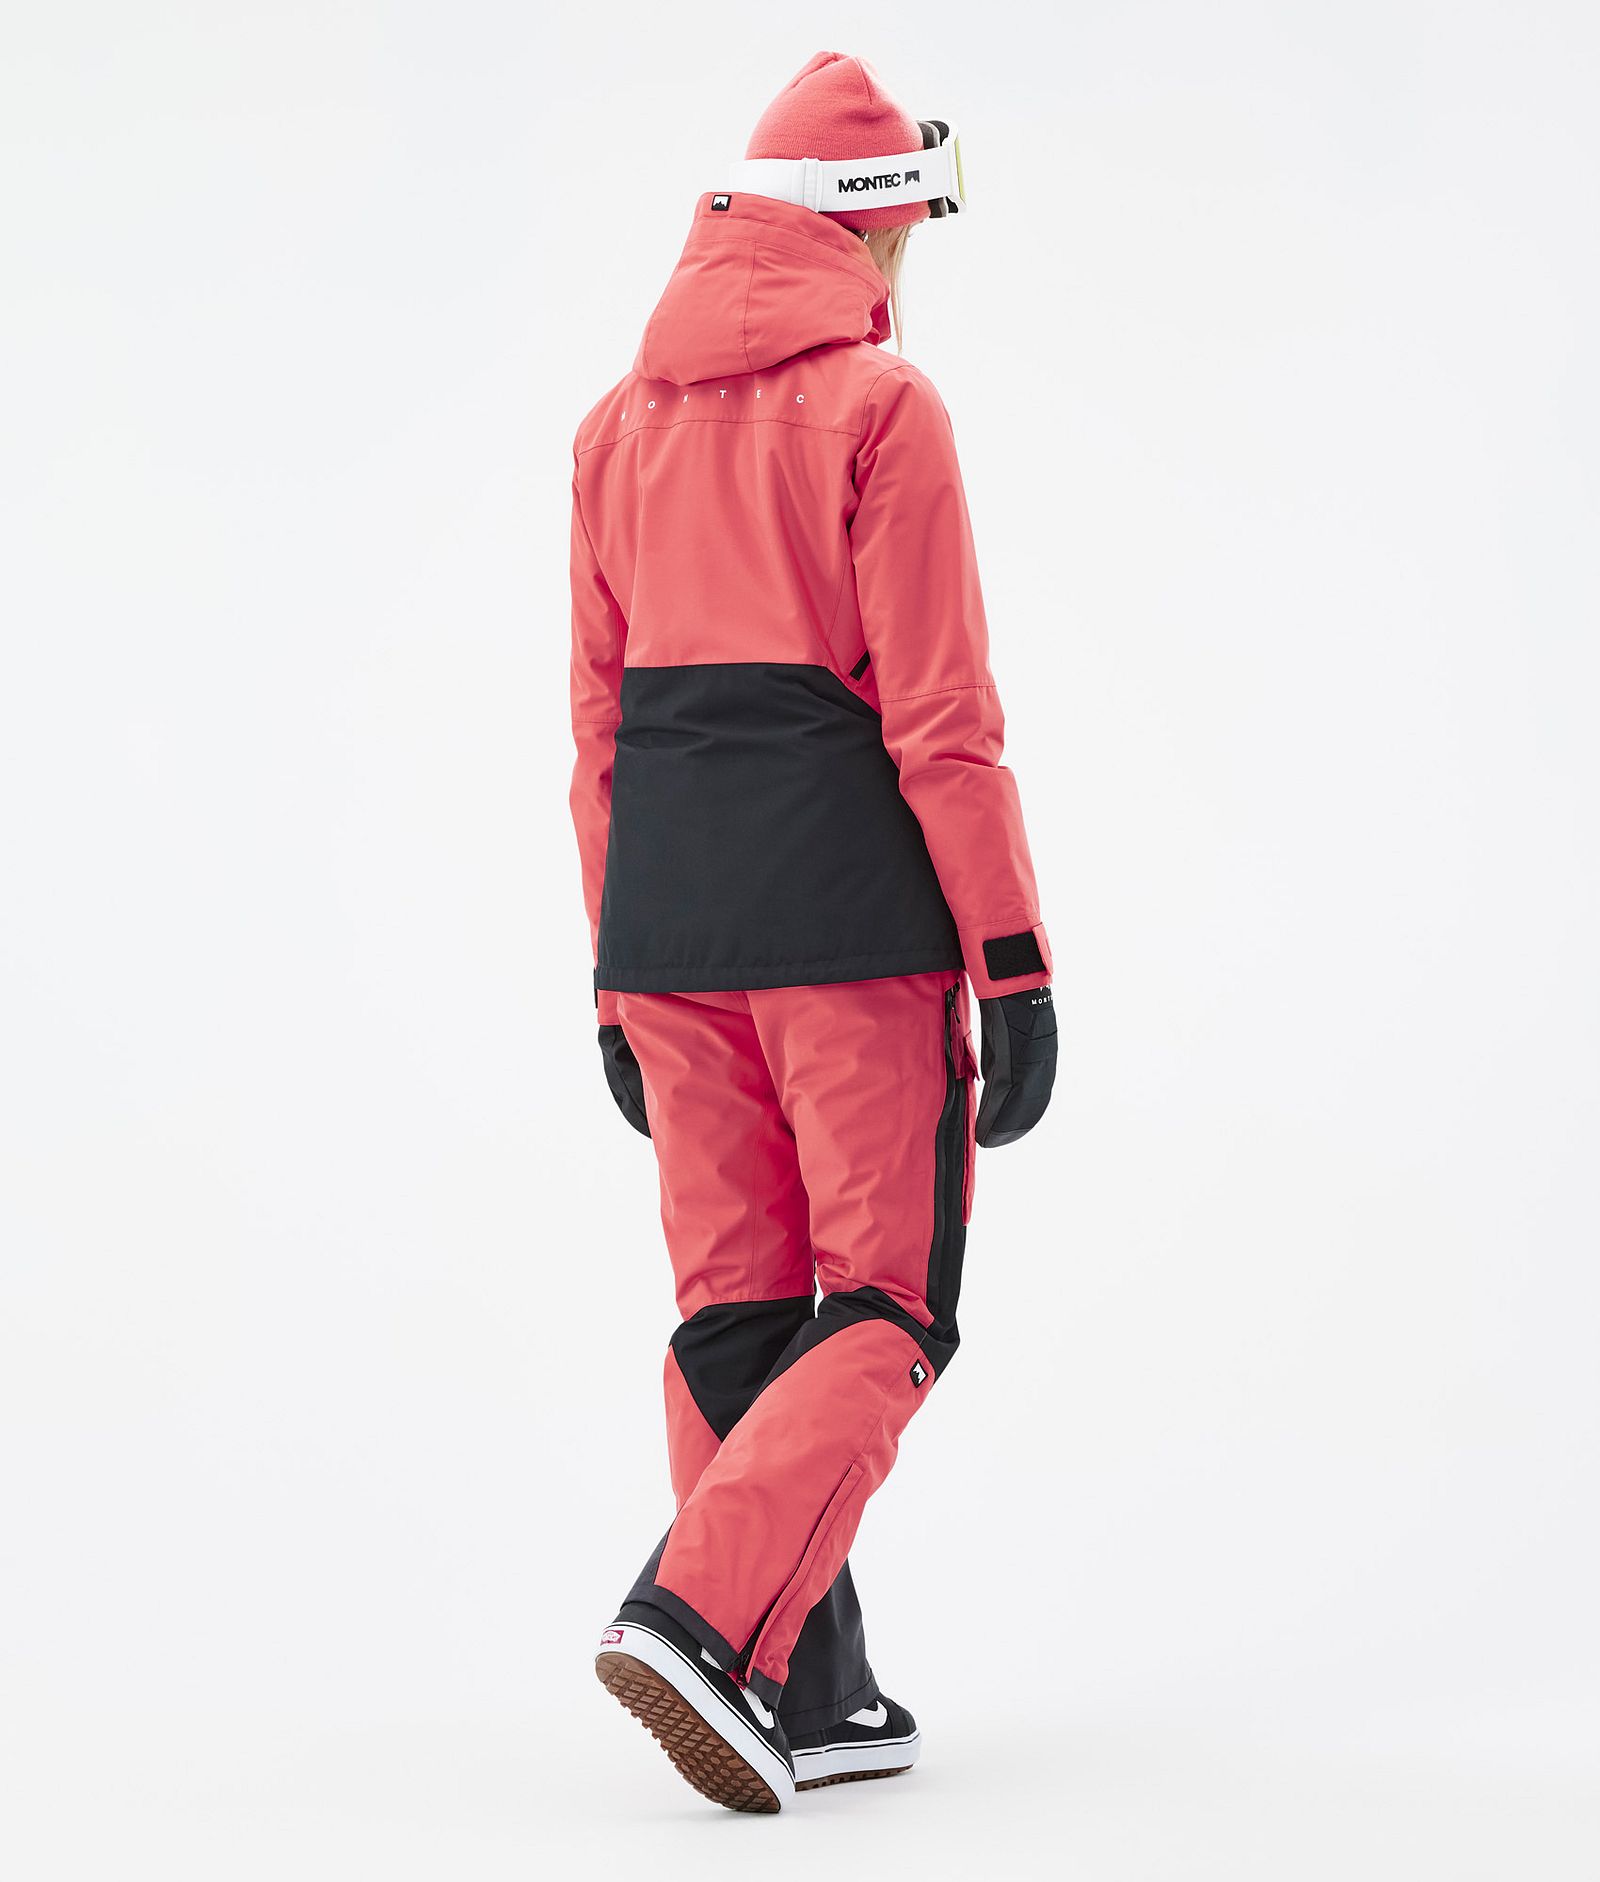 Moss W Veste Snowboard Femme Coral/Black Renewed, Image 6 sur 11